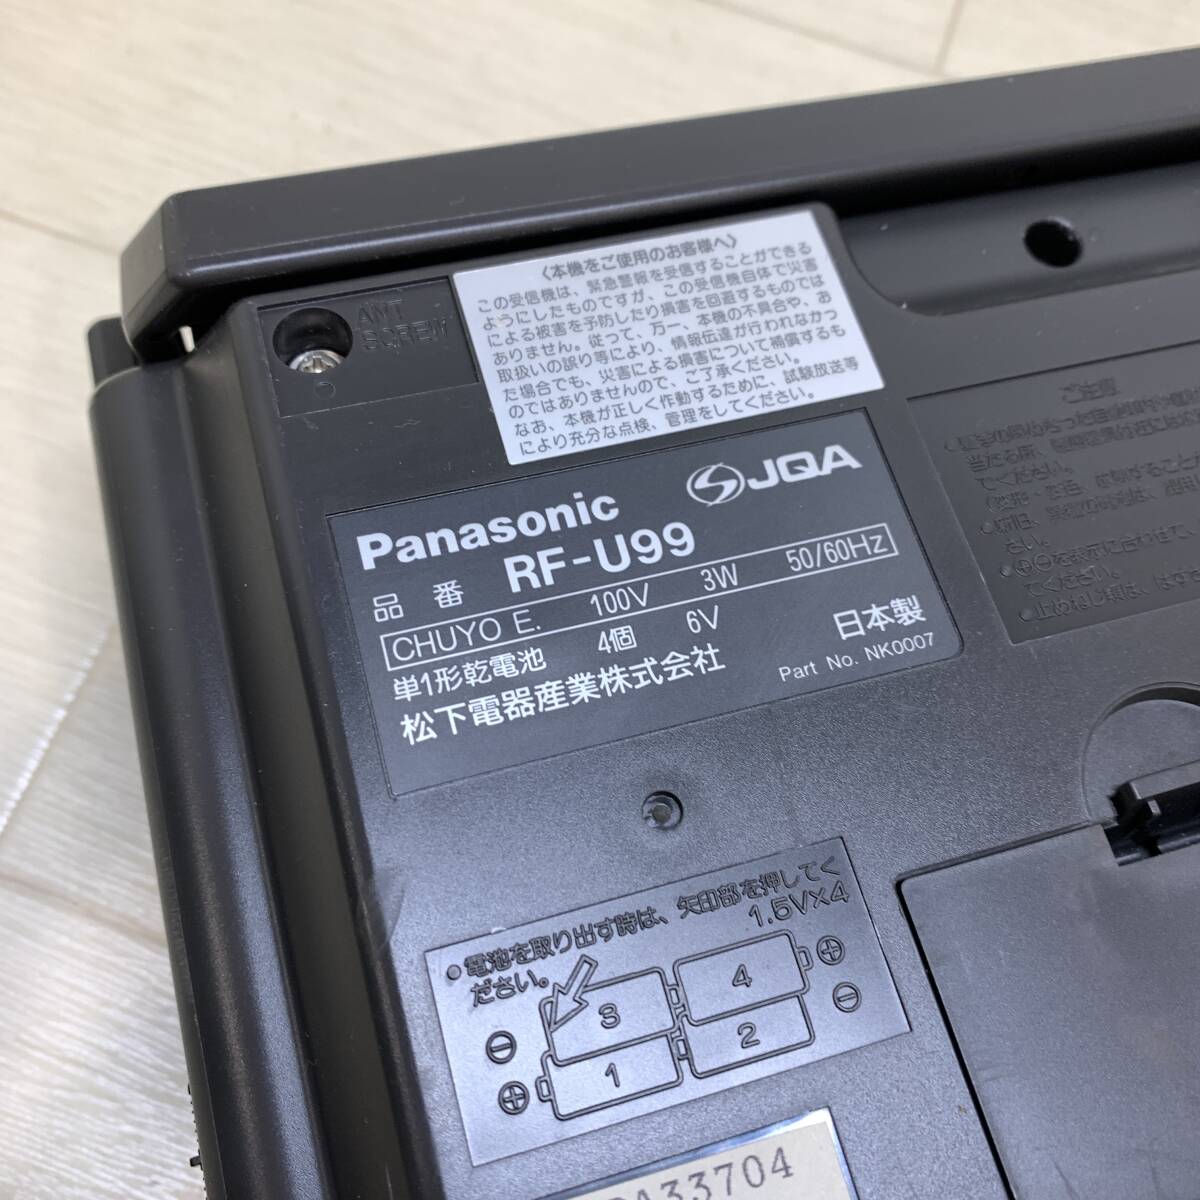 #Panasonic RF-U99 Panasonic urgent alarm broadcast TV-FM-AM 3 band receiver made in Japan ( black ) one part operation verification #R41759